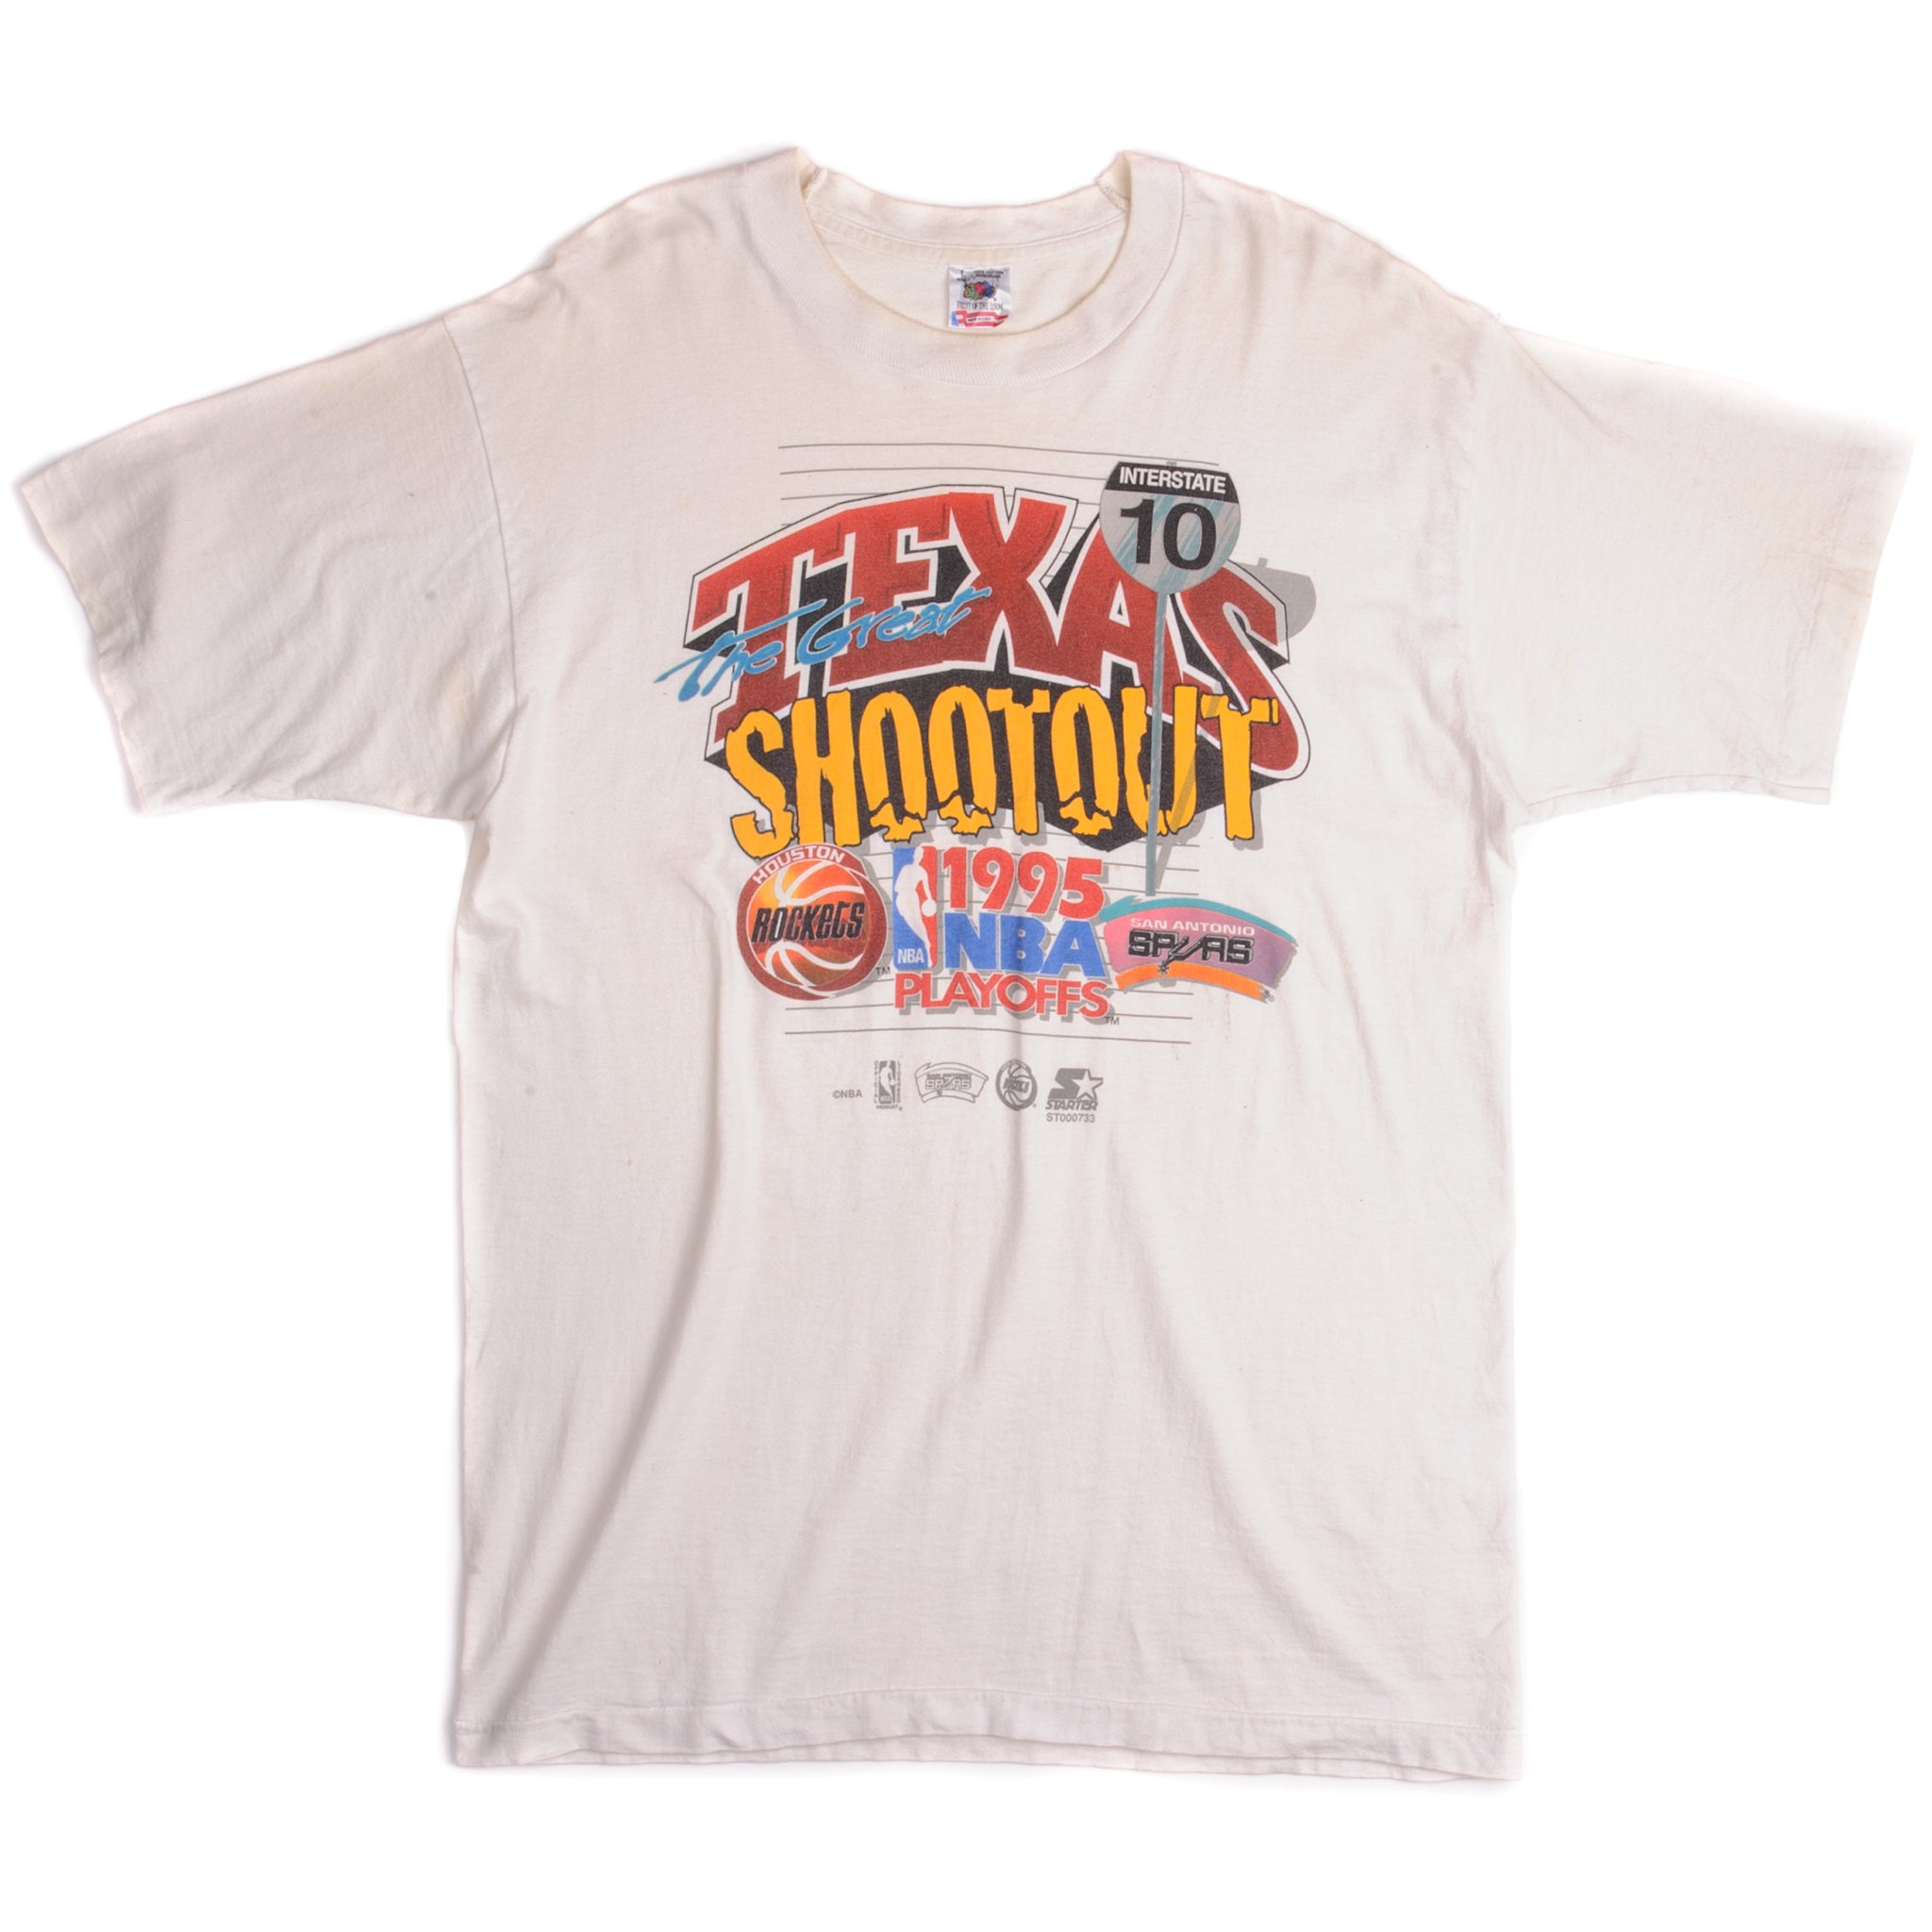 Starter Vintage 1995 NBA World Champions Houston Rockets Single Stitch T-Shirt.